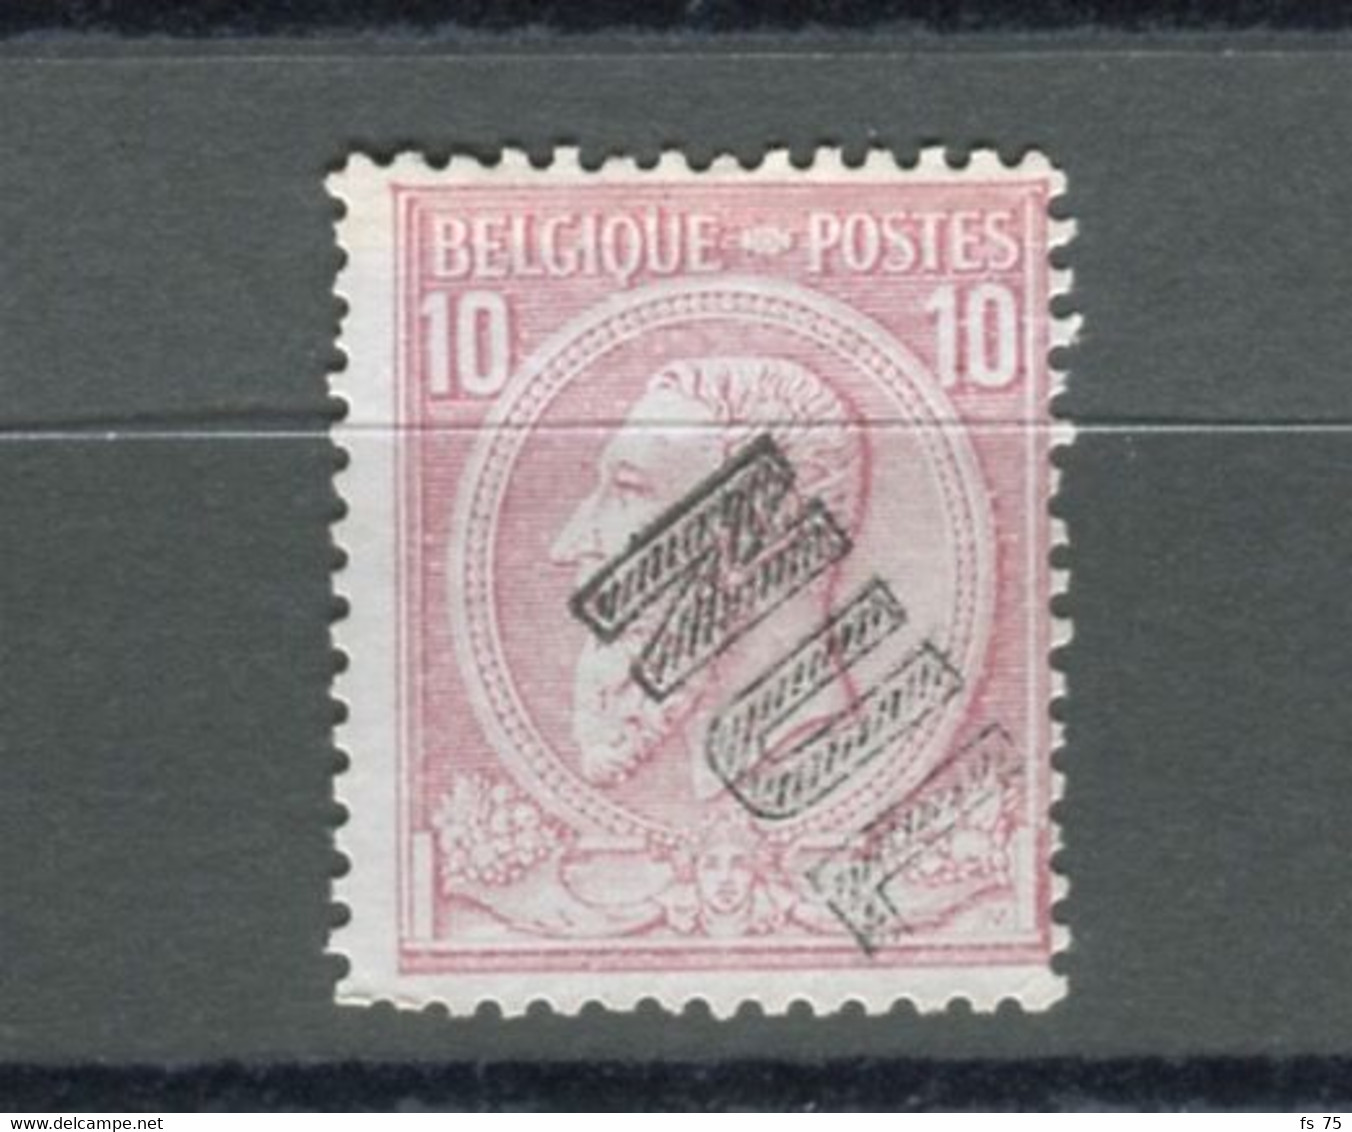 BELGIQUE - COB N°46 10C ROSE OBLITERE GRIFFE NUL - 1884-1891 Léopold II